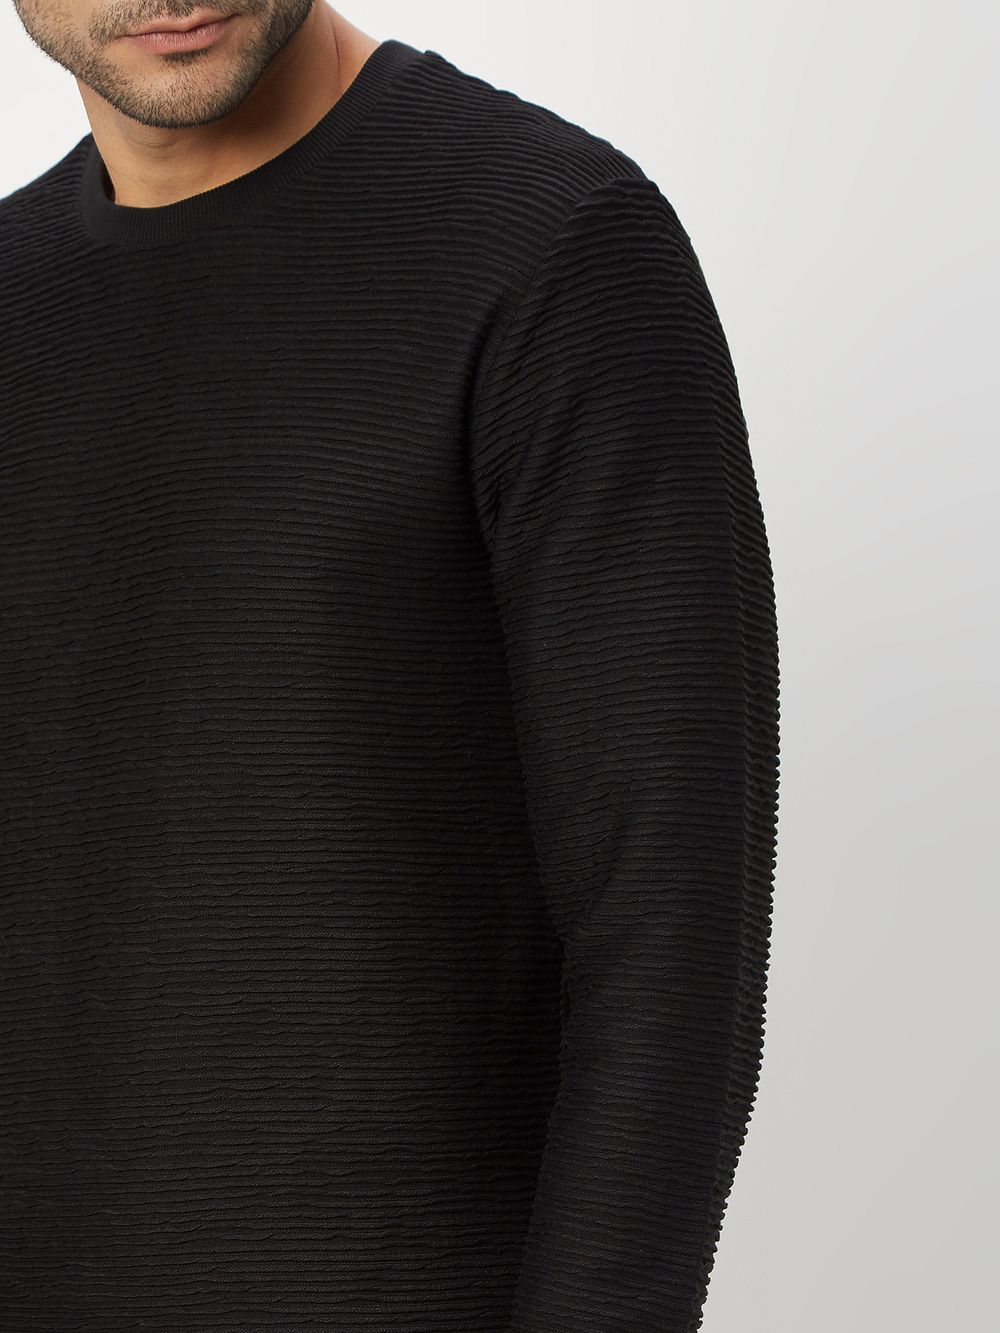 Black Jacquard Textured Jersey Sweatshirt